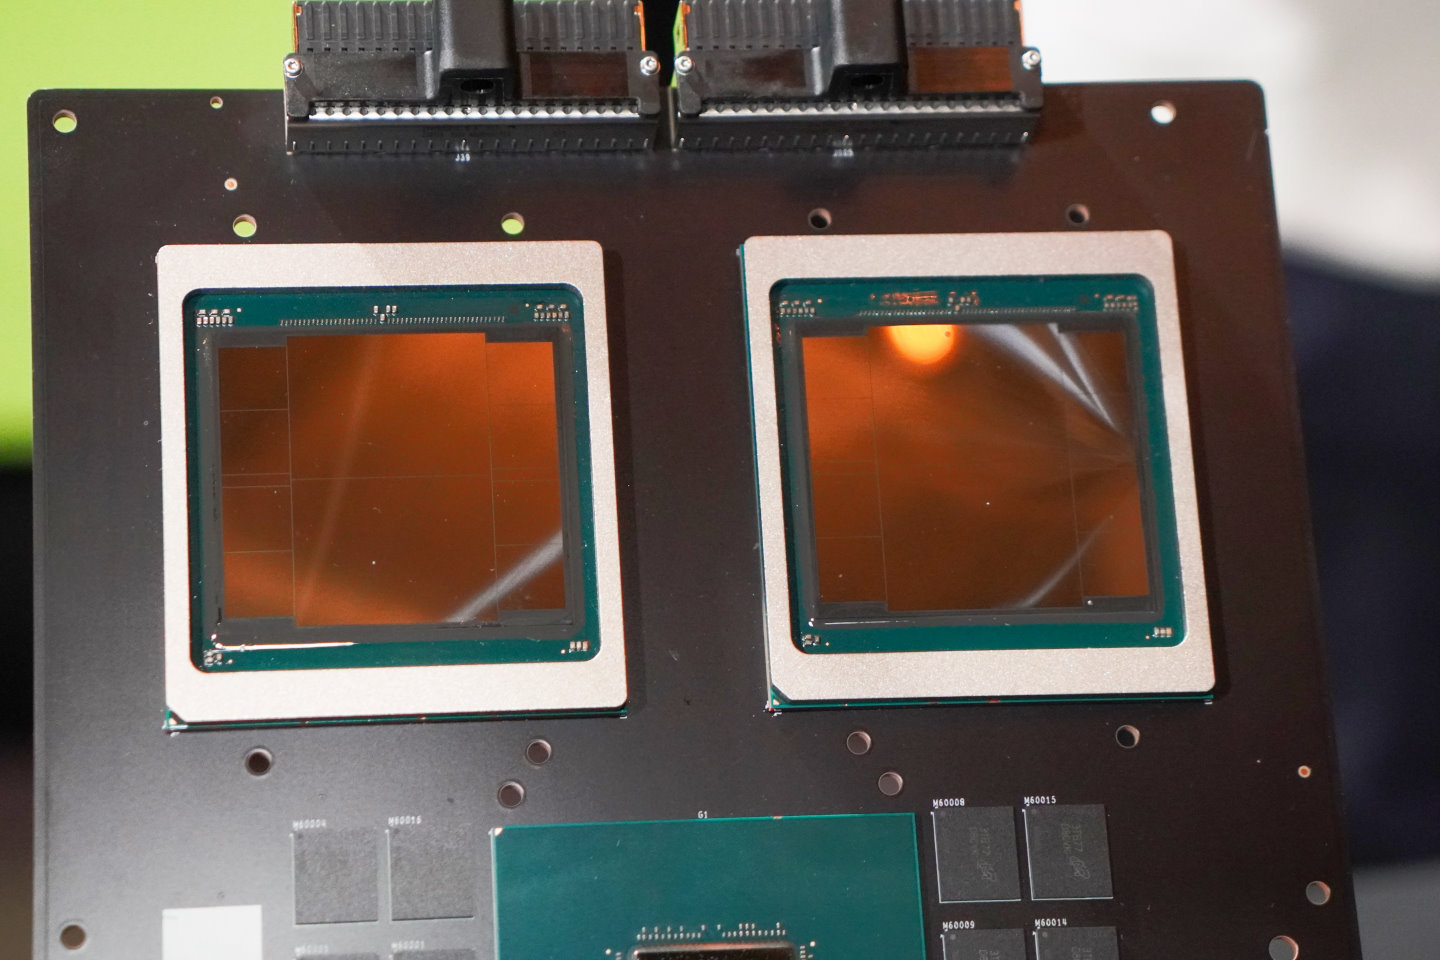 GB200 Superchip上具有2組Blackwell GPU，可以看到Blackwell GPU晶片是由2組裸晶構成。